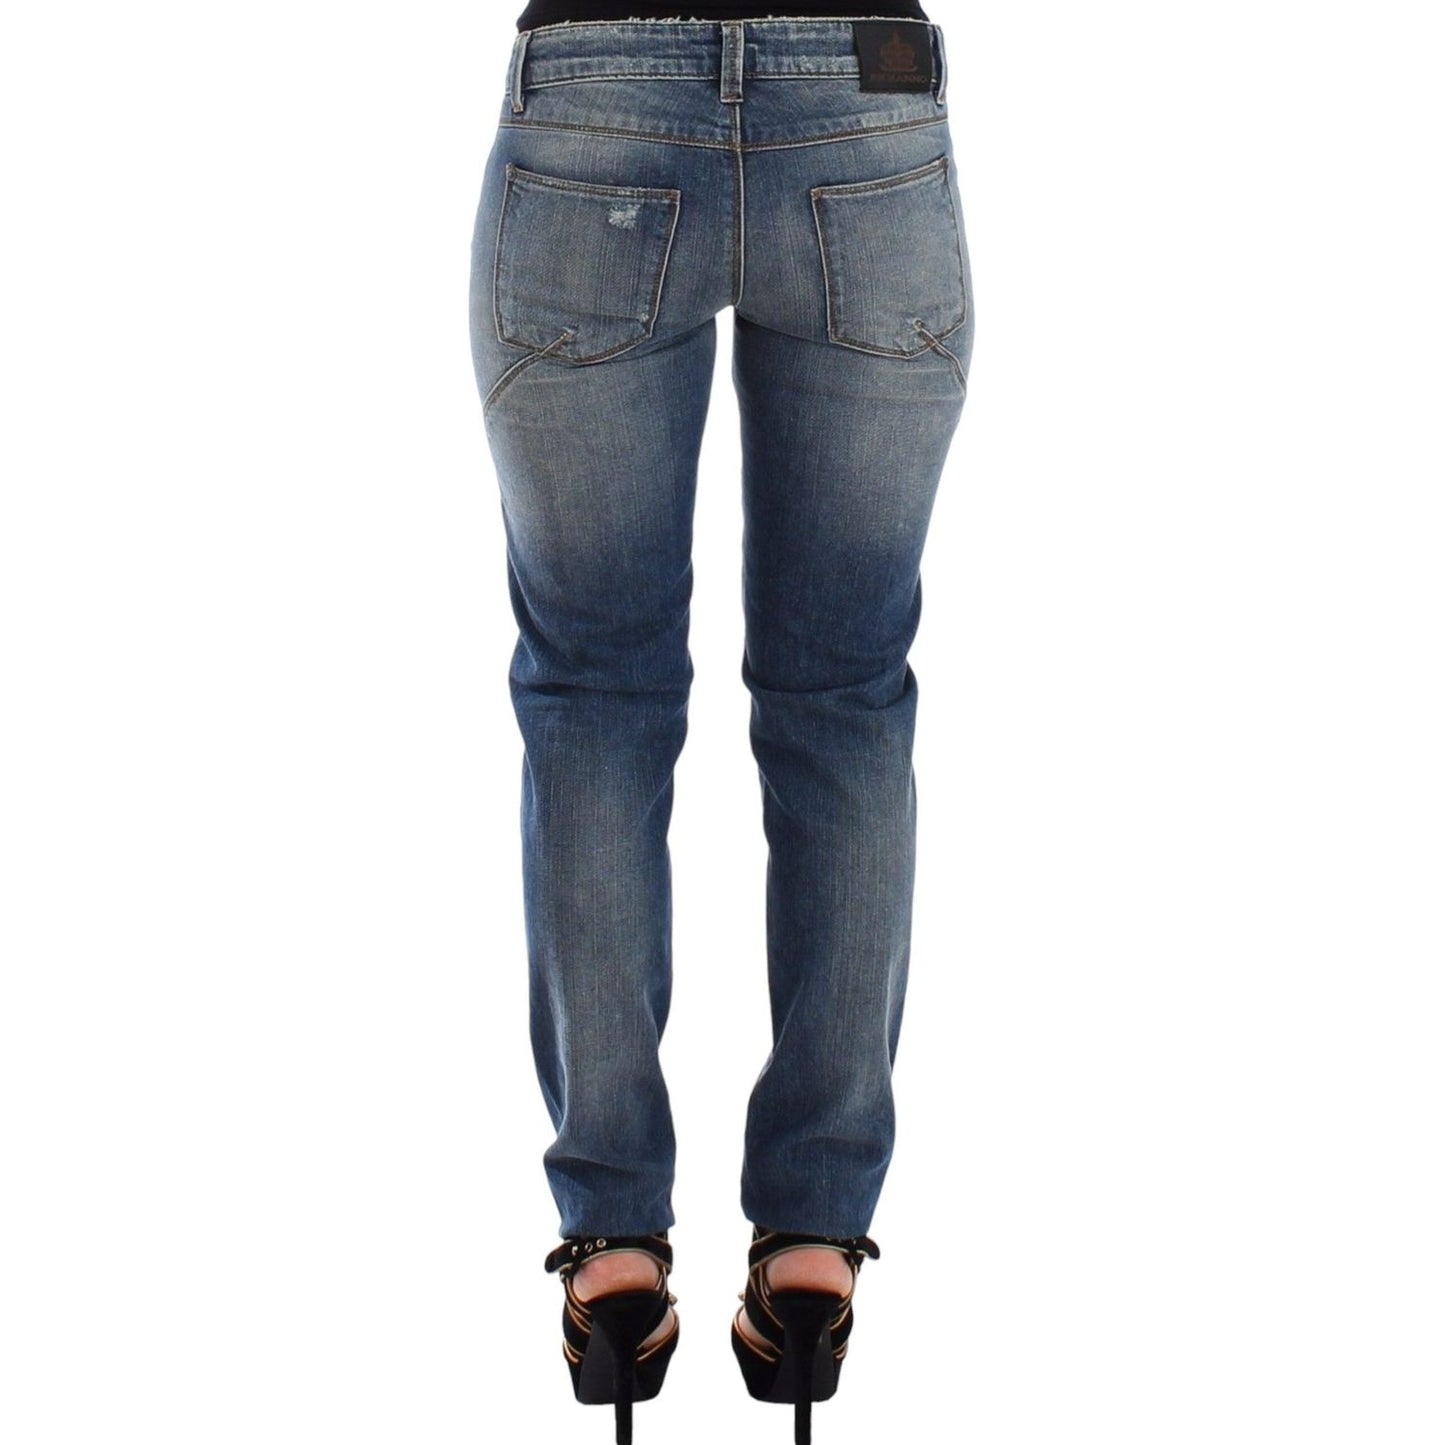 Ermanno Scervino Blue Slim Jeans Denim Pants Straight Stretch blue-slim-jeans-denim-pants-straight-stretch 36658-ermanno-scervino-blue-slim-jeans-denim-pants-straight-stretch-2-2-scaled-8be4f6fd-be7.jpg